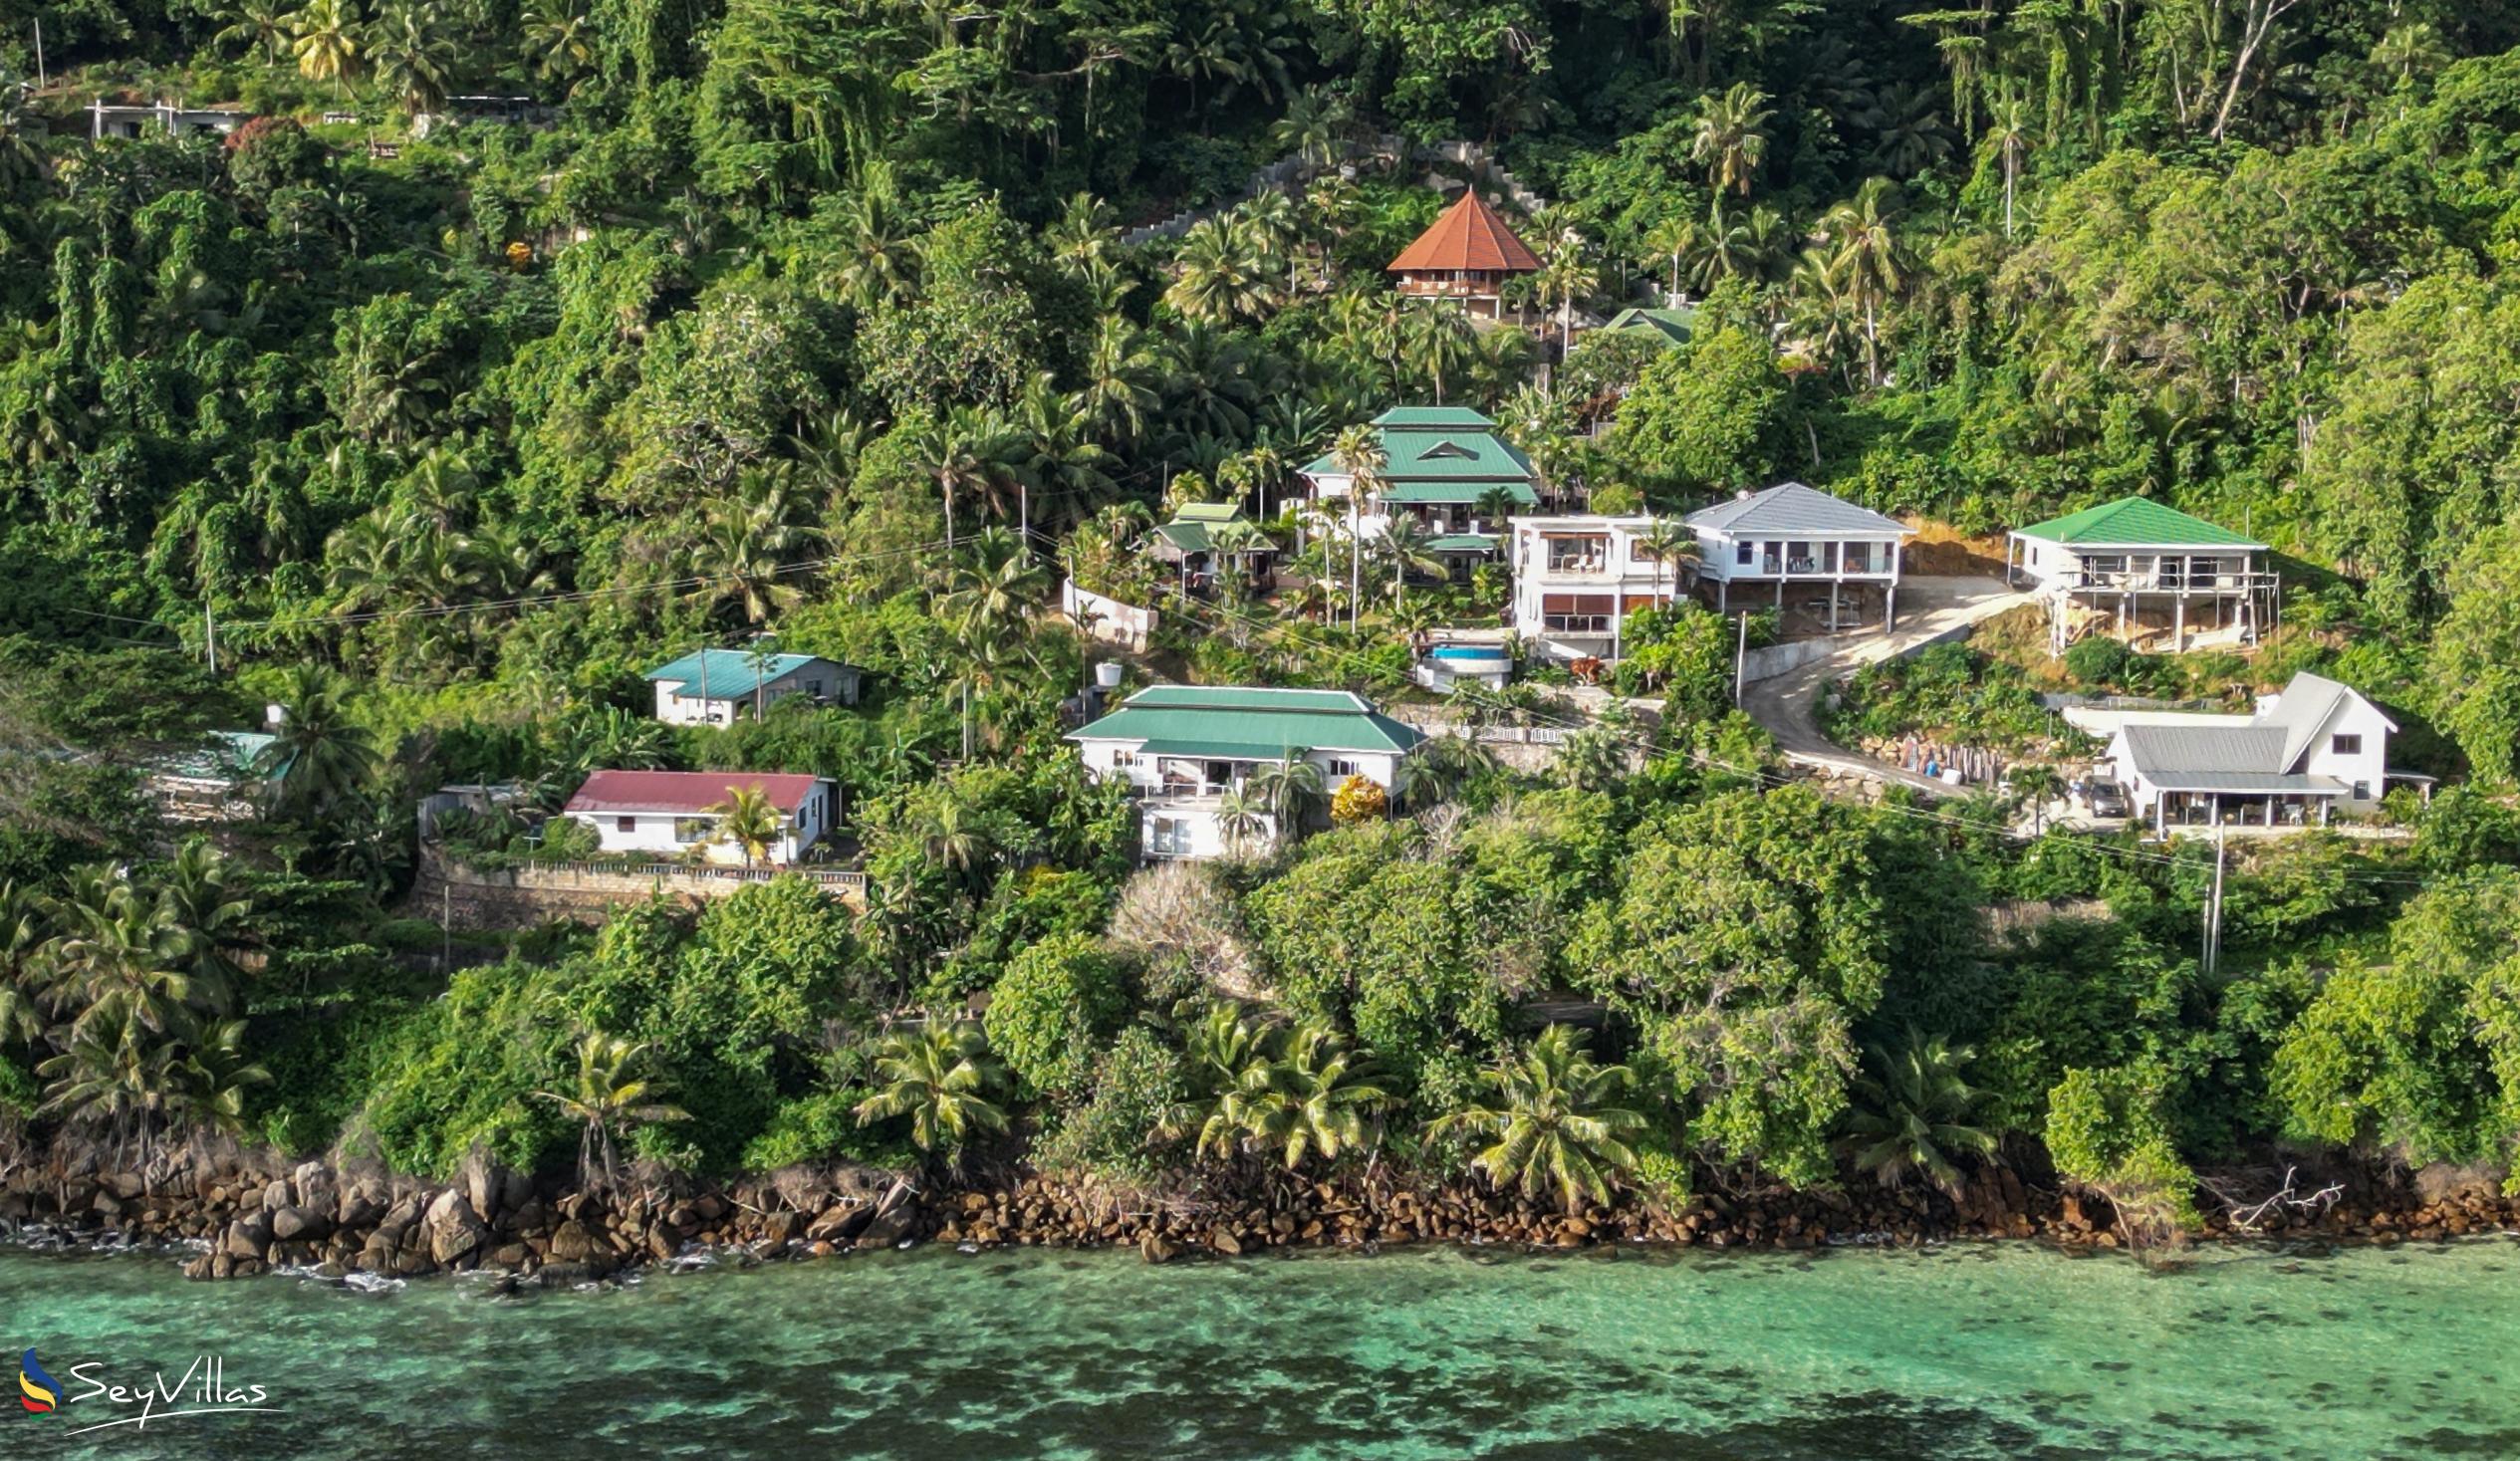 Photo 54: Chalets Bougainville - Outdoor area - Mahé (Seychelles)